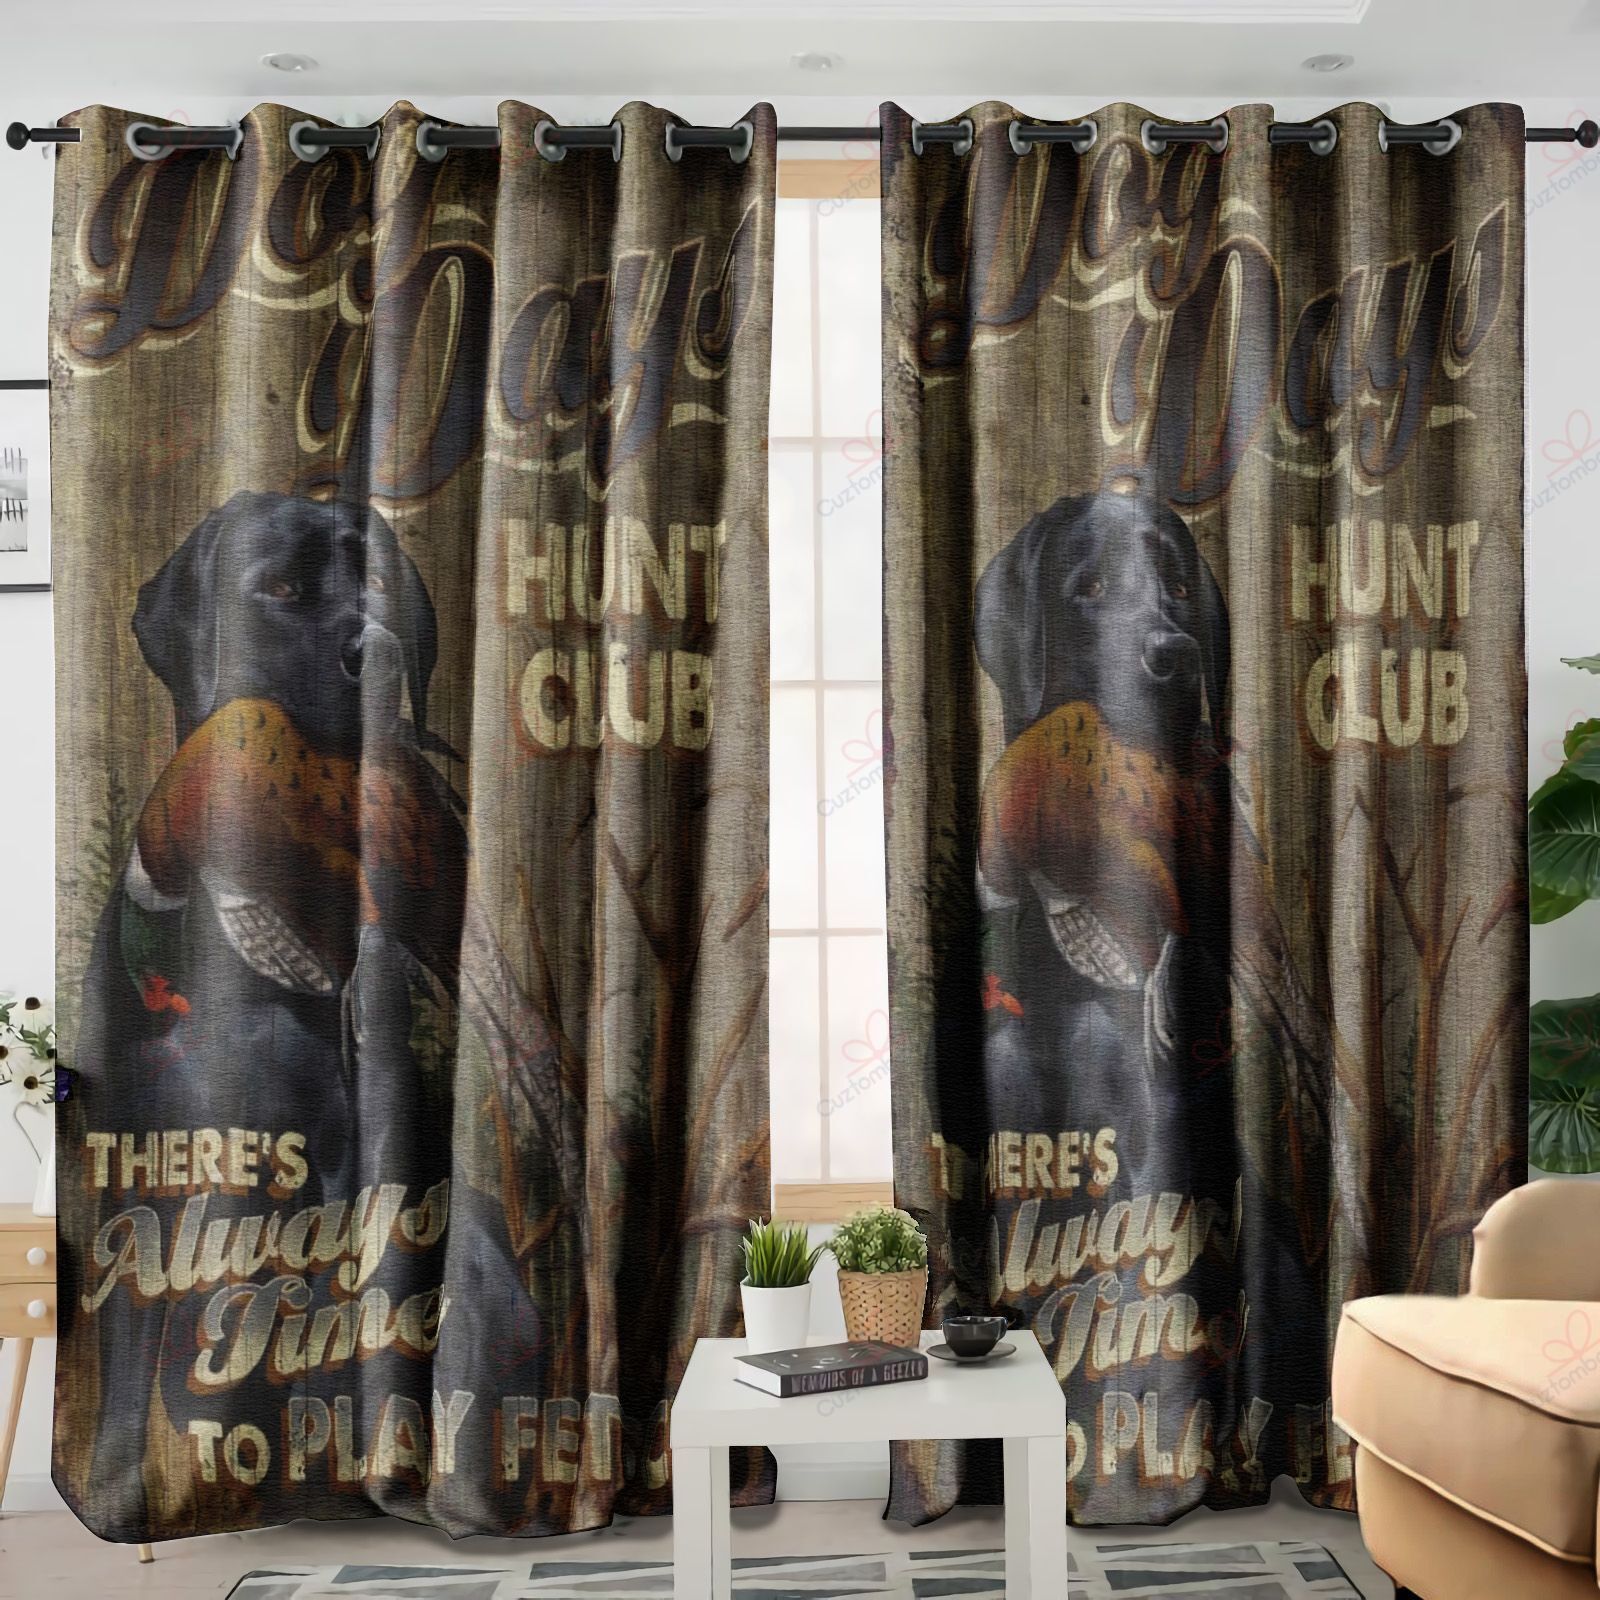 Dog Hunt Club Printed Window Curtain Home Decor